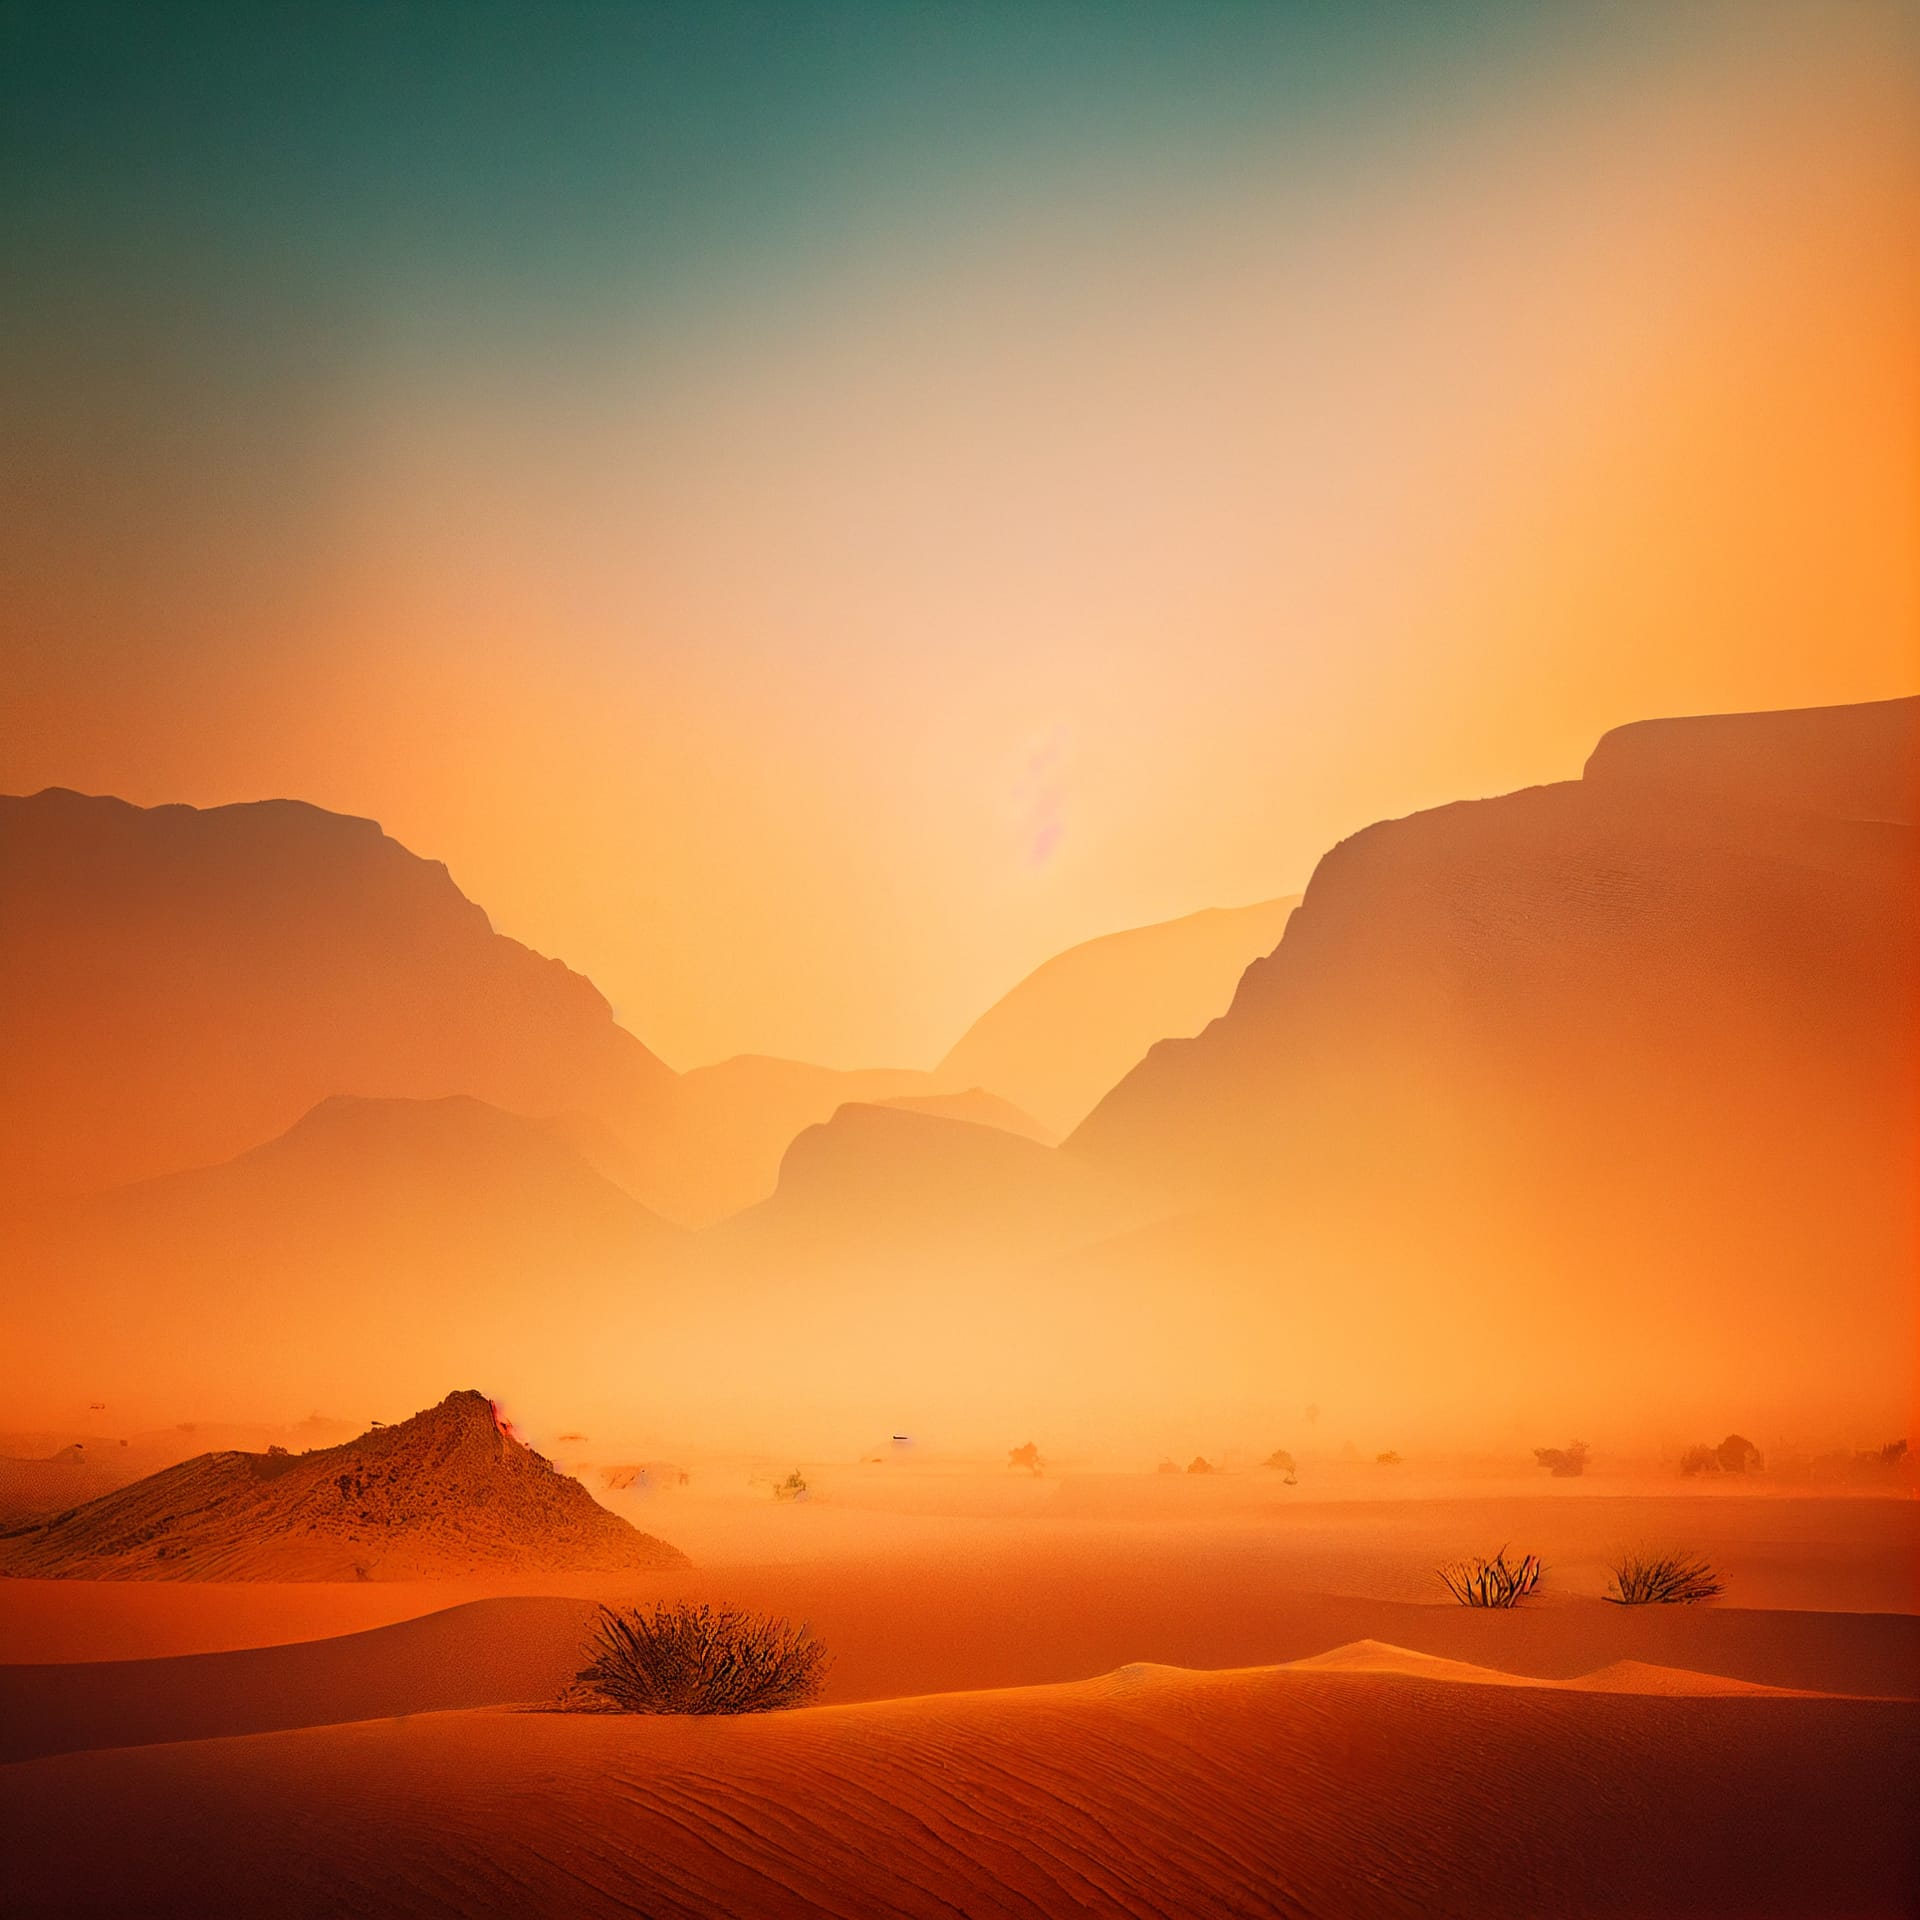 Beautiful desert landscape sunset sunrise excellent image